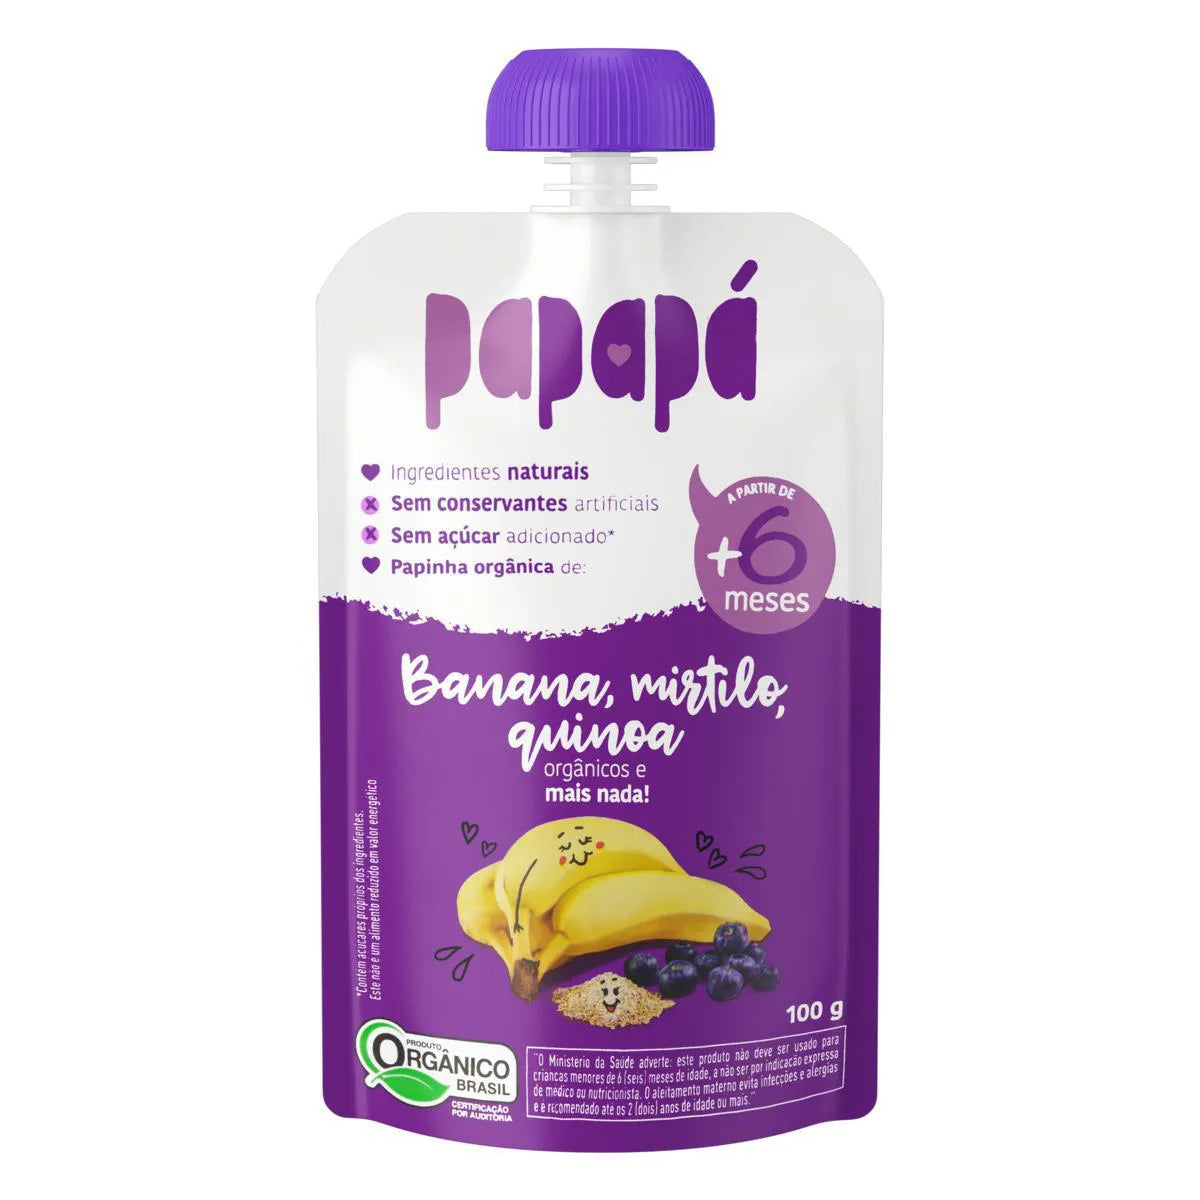 PAPAPA - Organic baby food | Banana, blueberry & quinoa - 100g